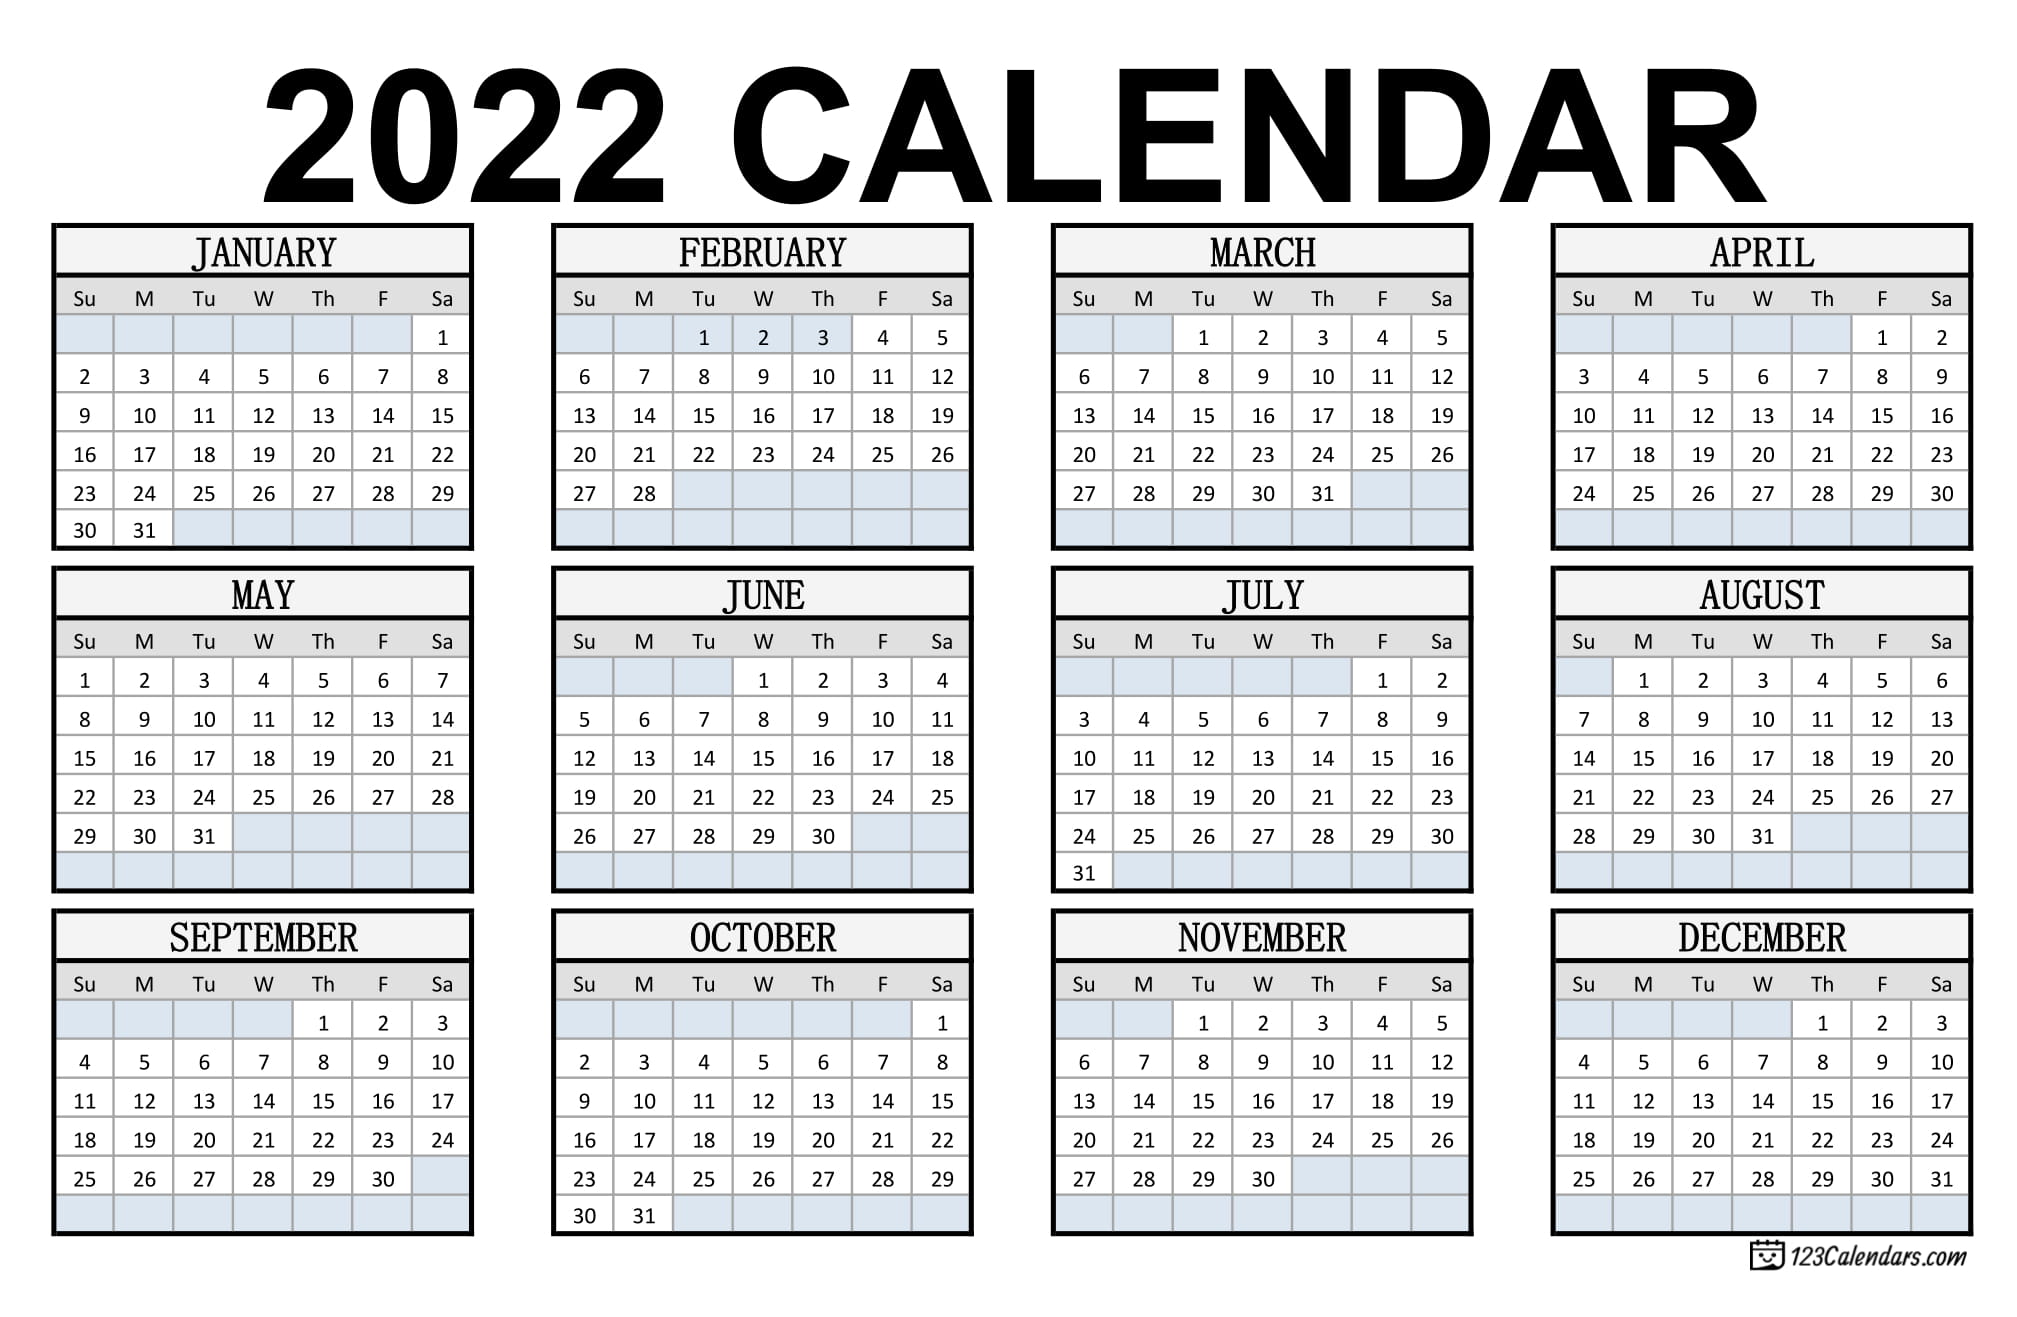 Download Calendar 2022 Year 2022 Calendar Templates | 123Calendars.com